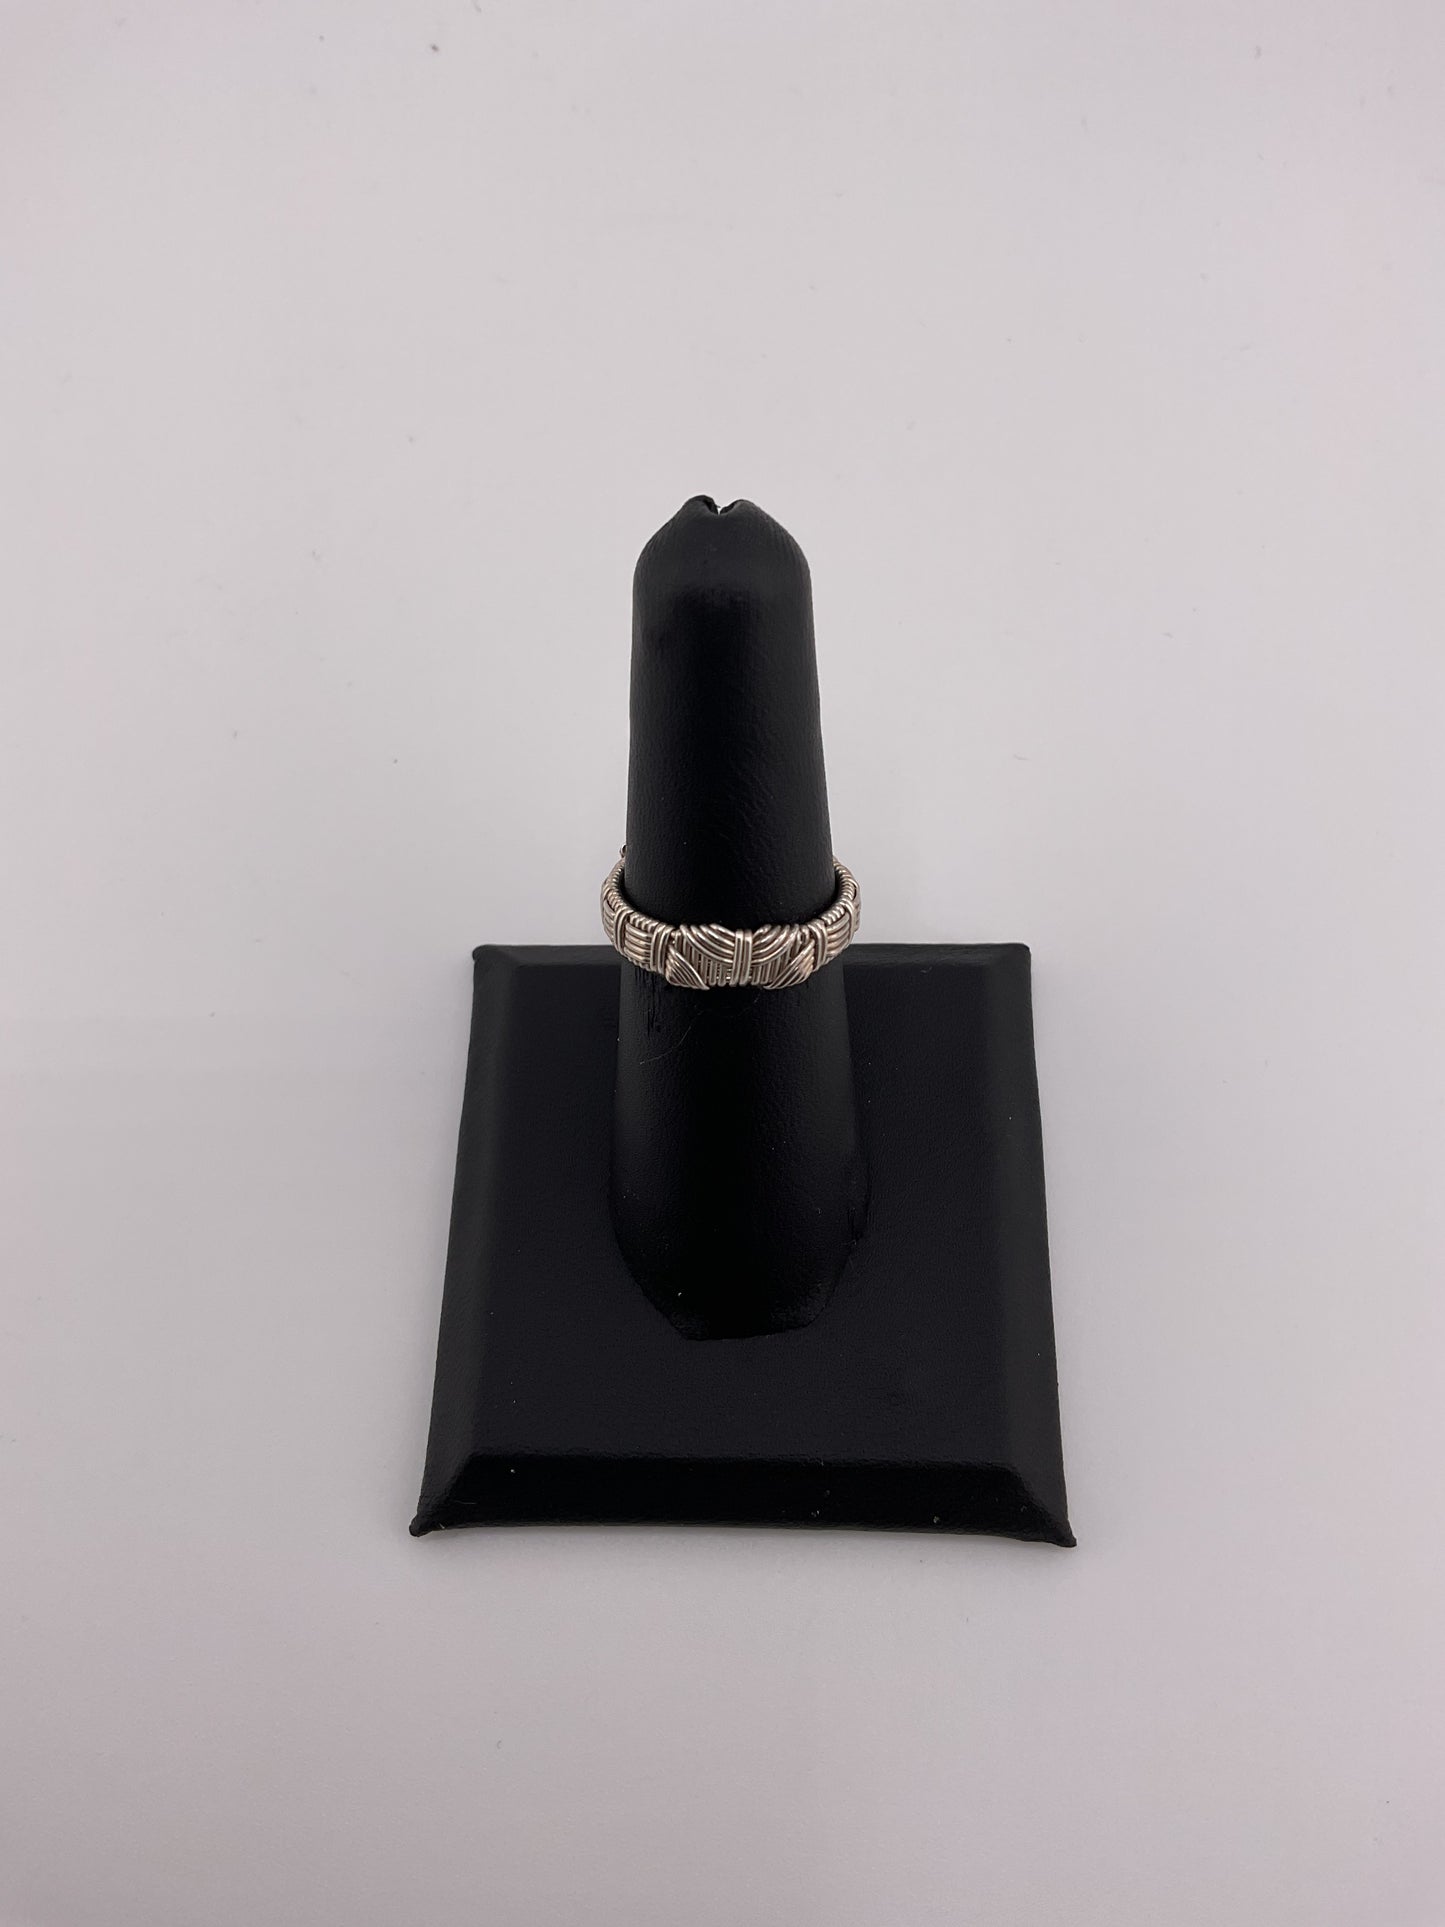 Jaybirds Jewelry Silver Wrapped Rhodochrosite Ring Size 6 1/4